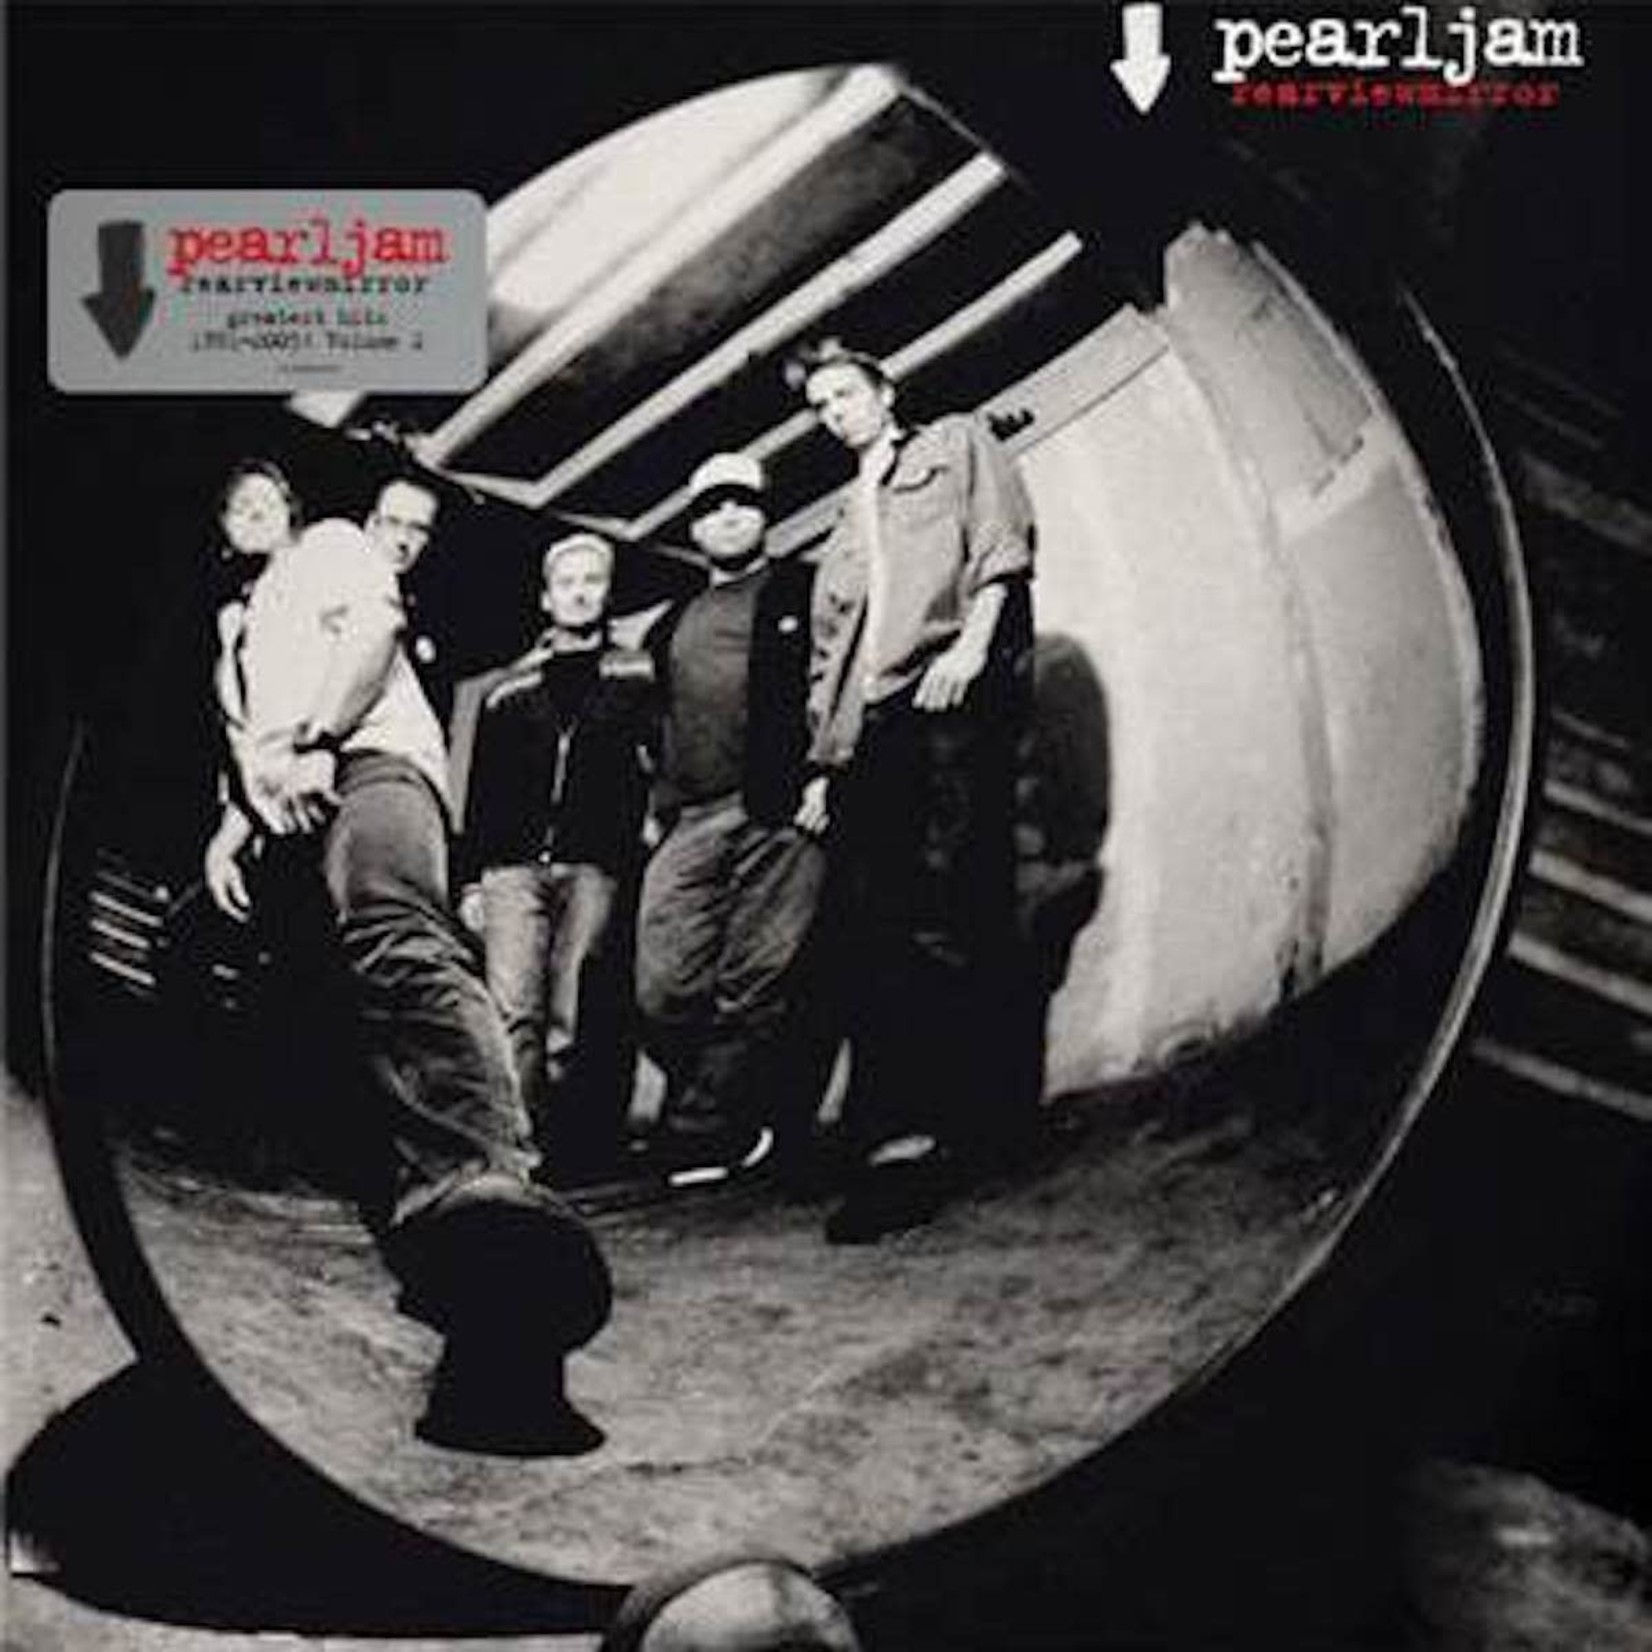 [New] Pearl Jam - Rearviewmirror, Volume 2- Greatest Hits 1991-2003 (2LP)